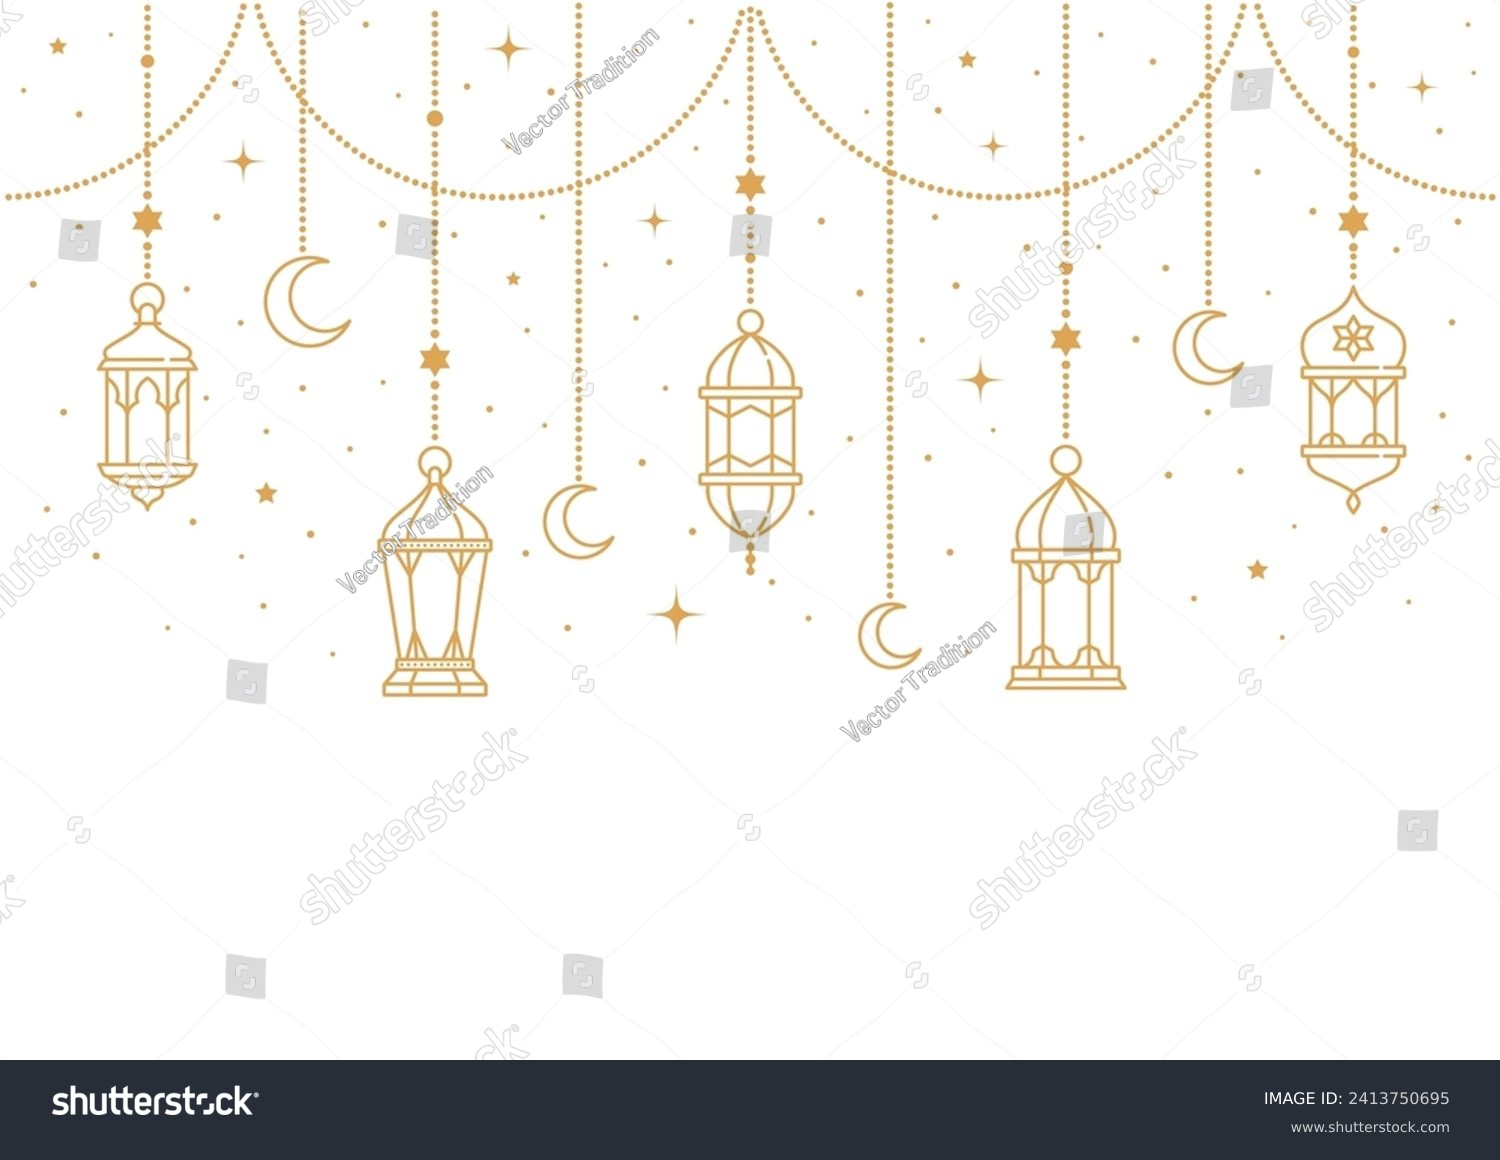 Ramadan Kareem and Eid Mubarak Arabian lanterns or lamps for Muslim holiday, vector background. Ramadan Kareem and Eid Mubarak greeting card for Islam holiday with gold stars, crescent moon on lantern #2413750695